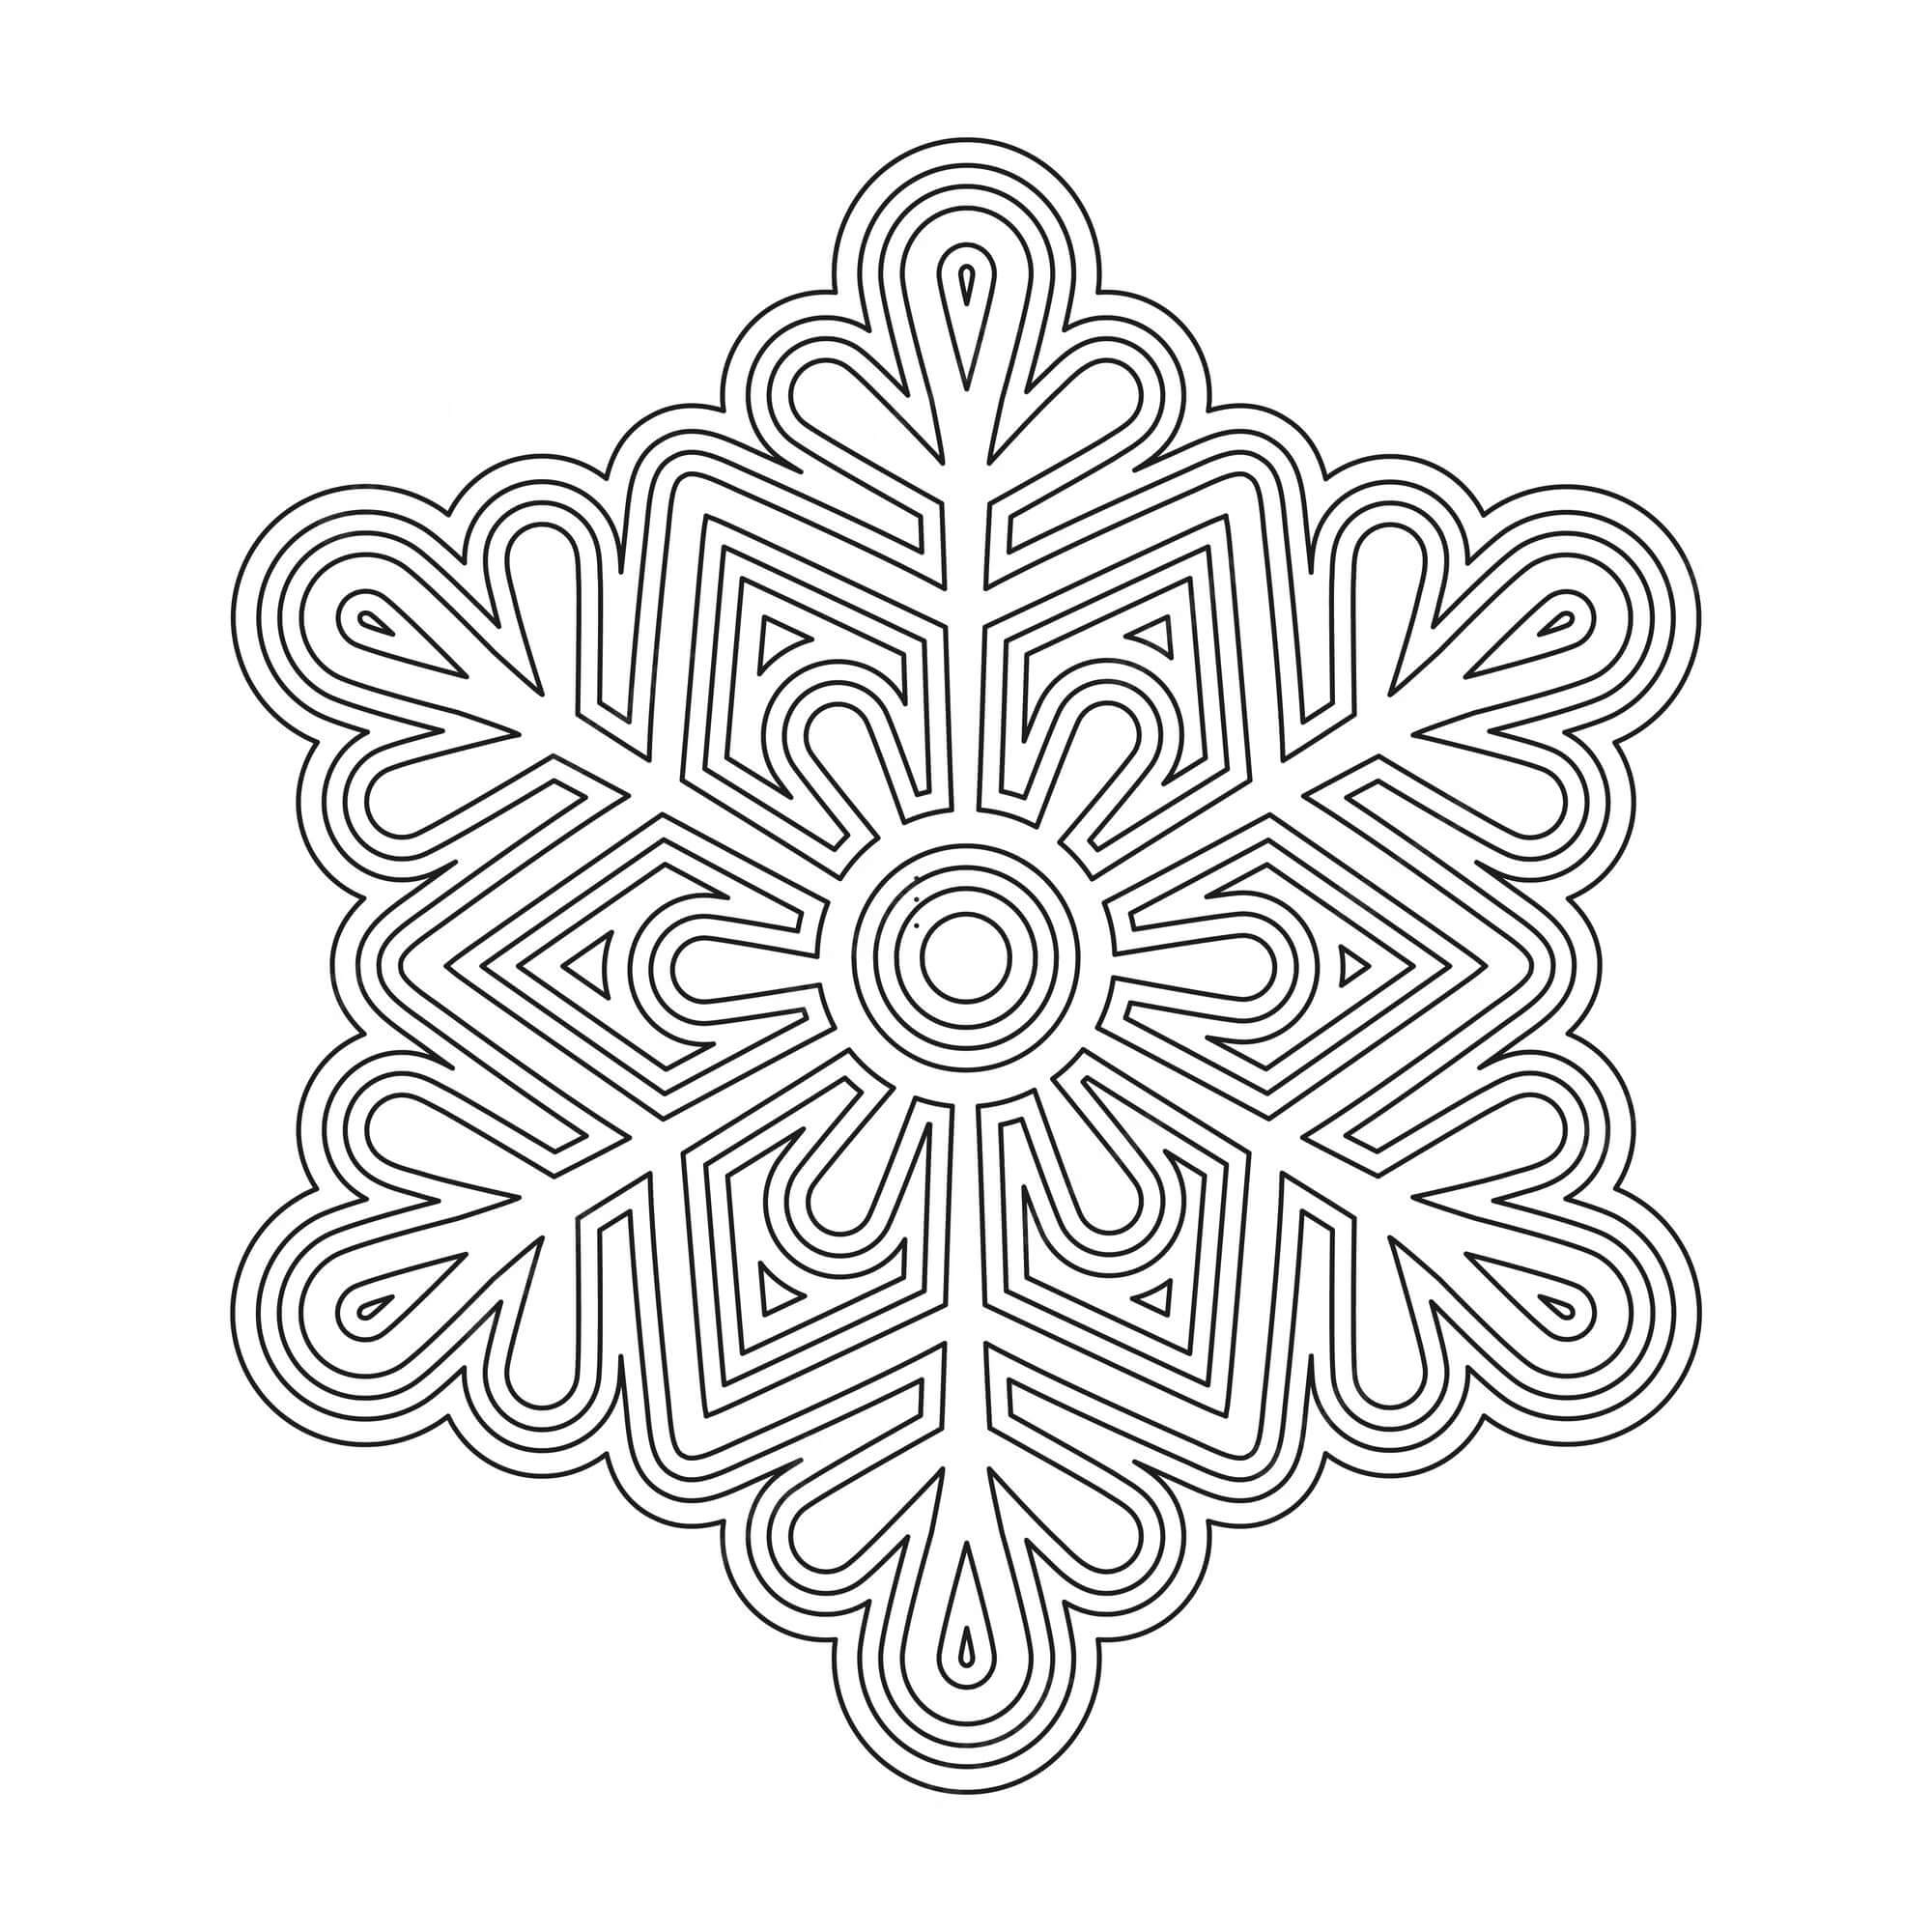 Mandala Winter Coloring Page – Sheet 3 Mandala